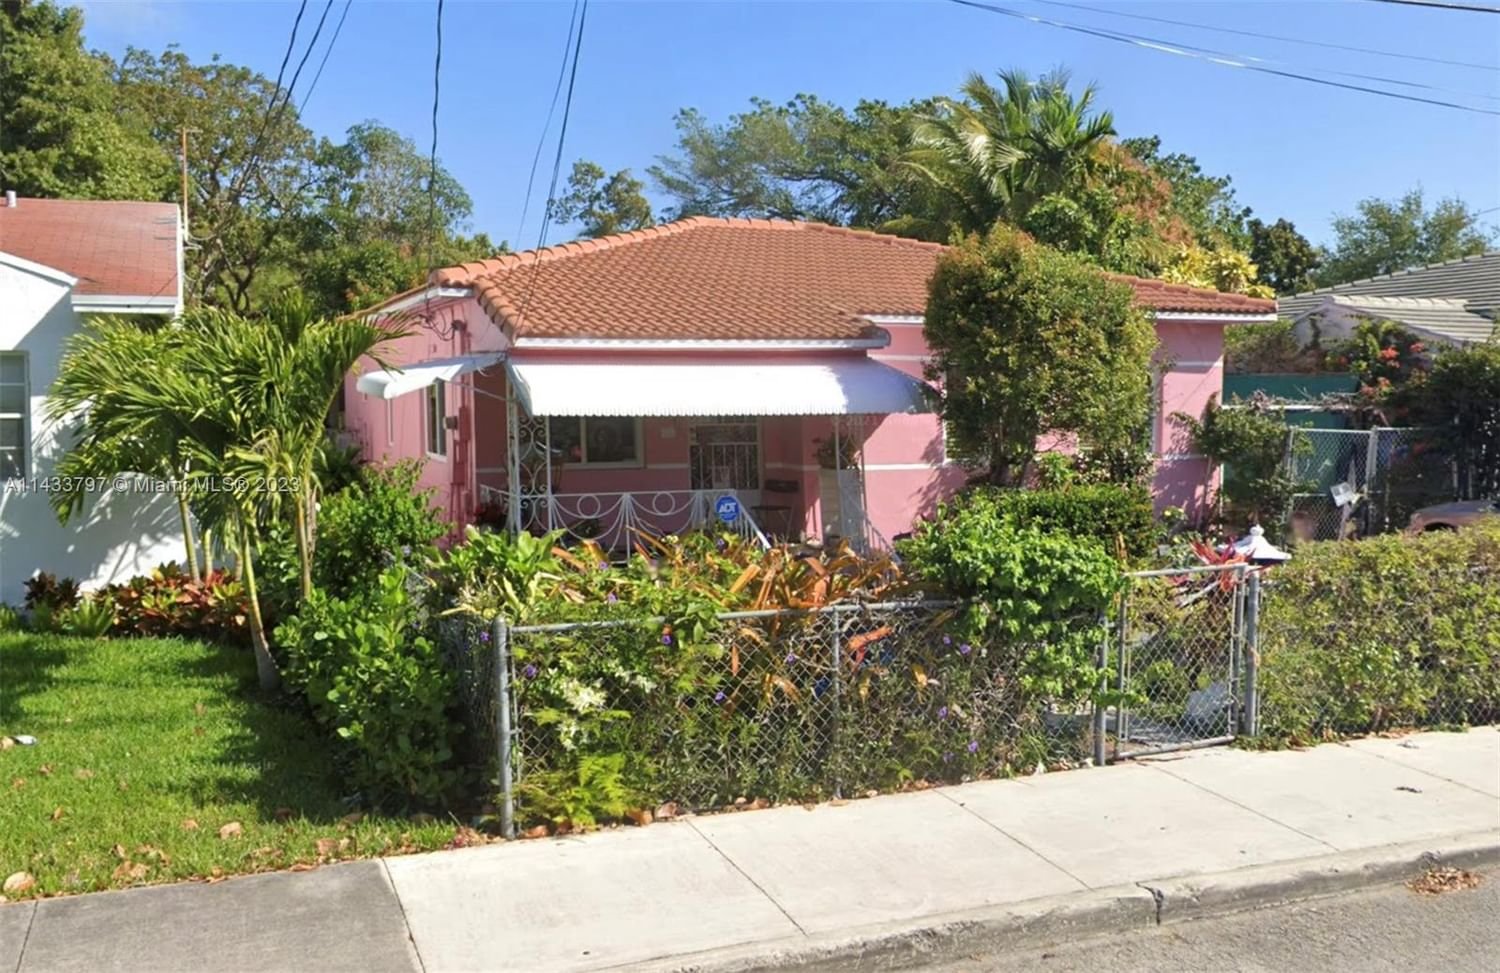 Real estate property located at 241 50th St, Miami-Dade County, Miami, FL